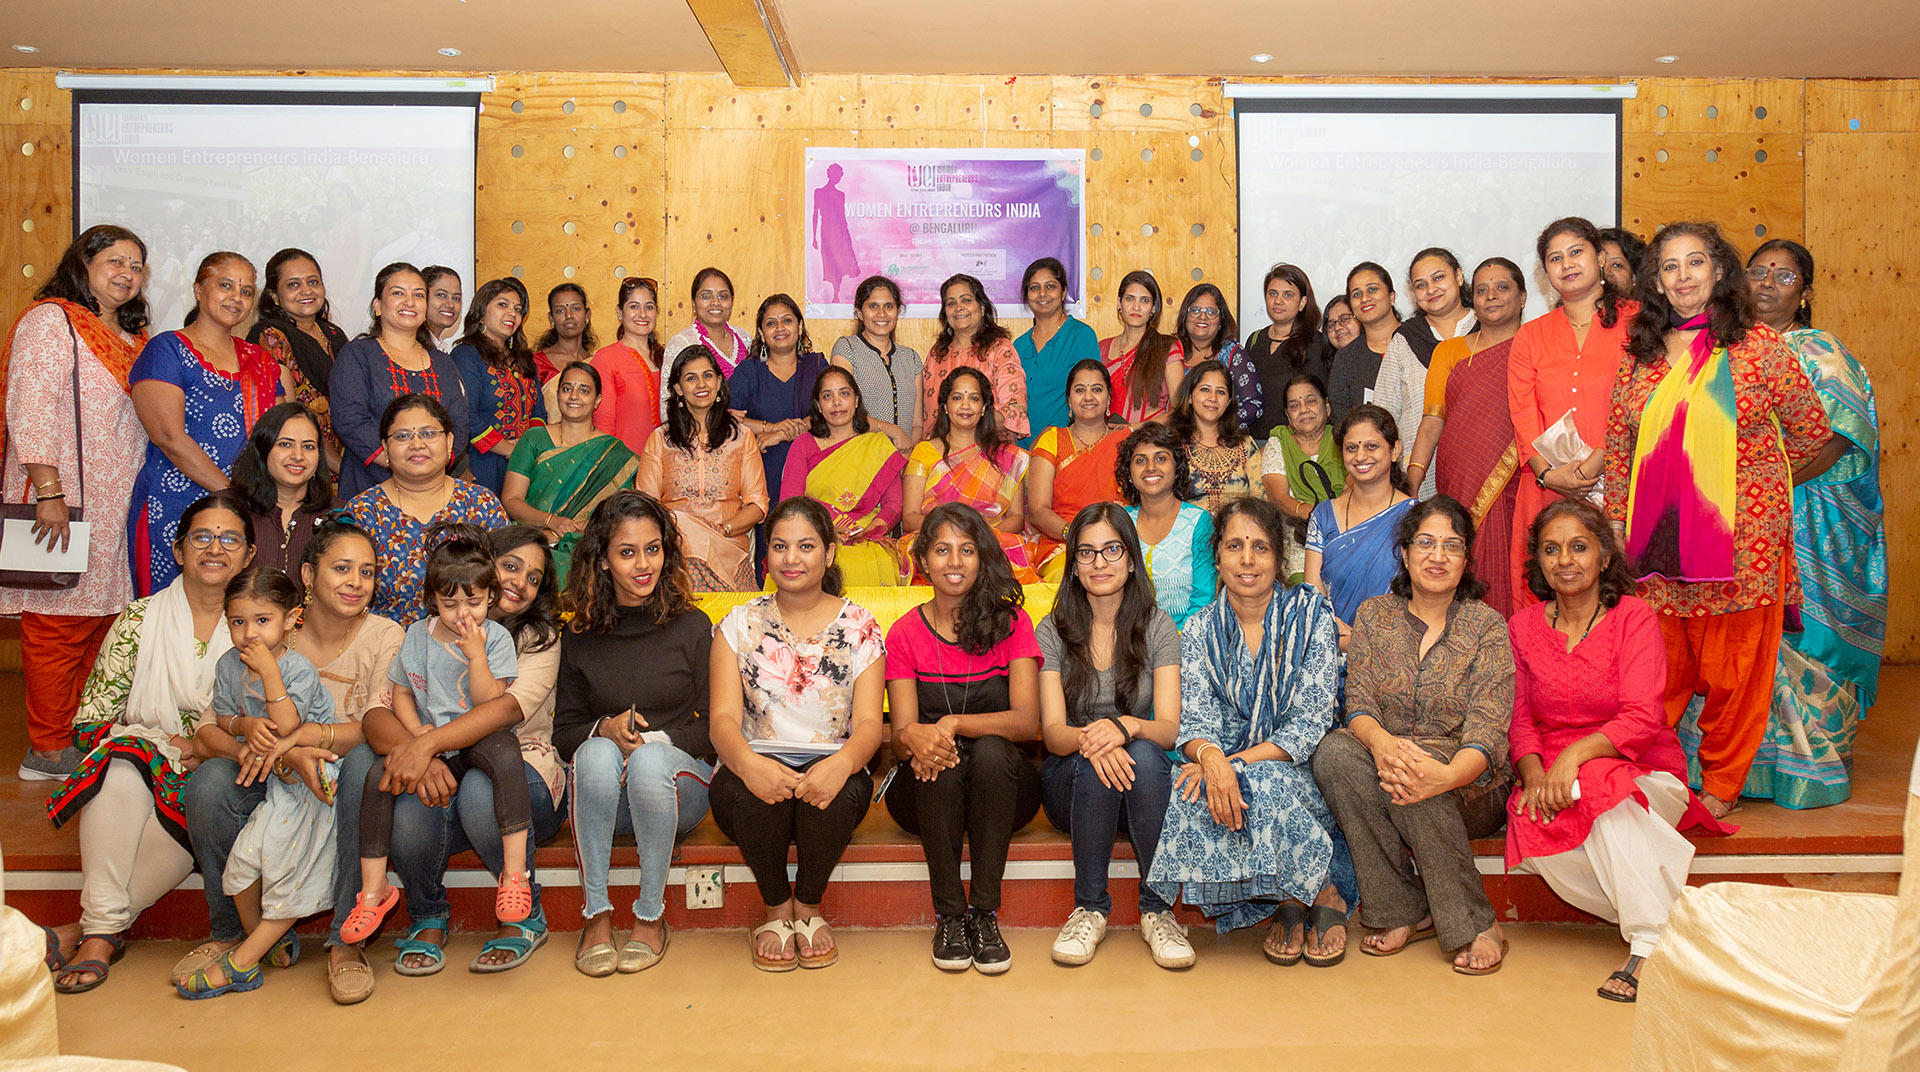 Women In Business in India